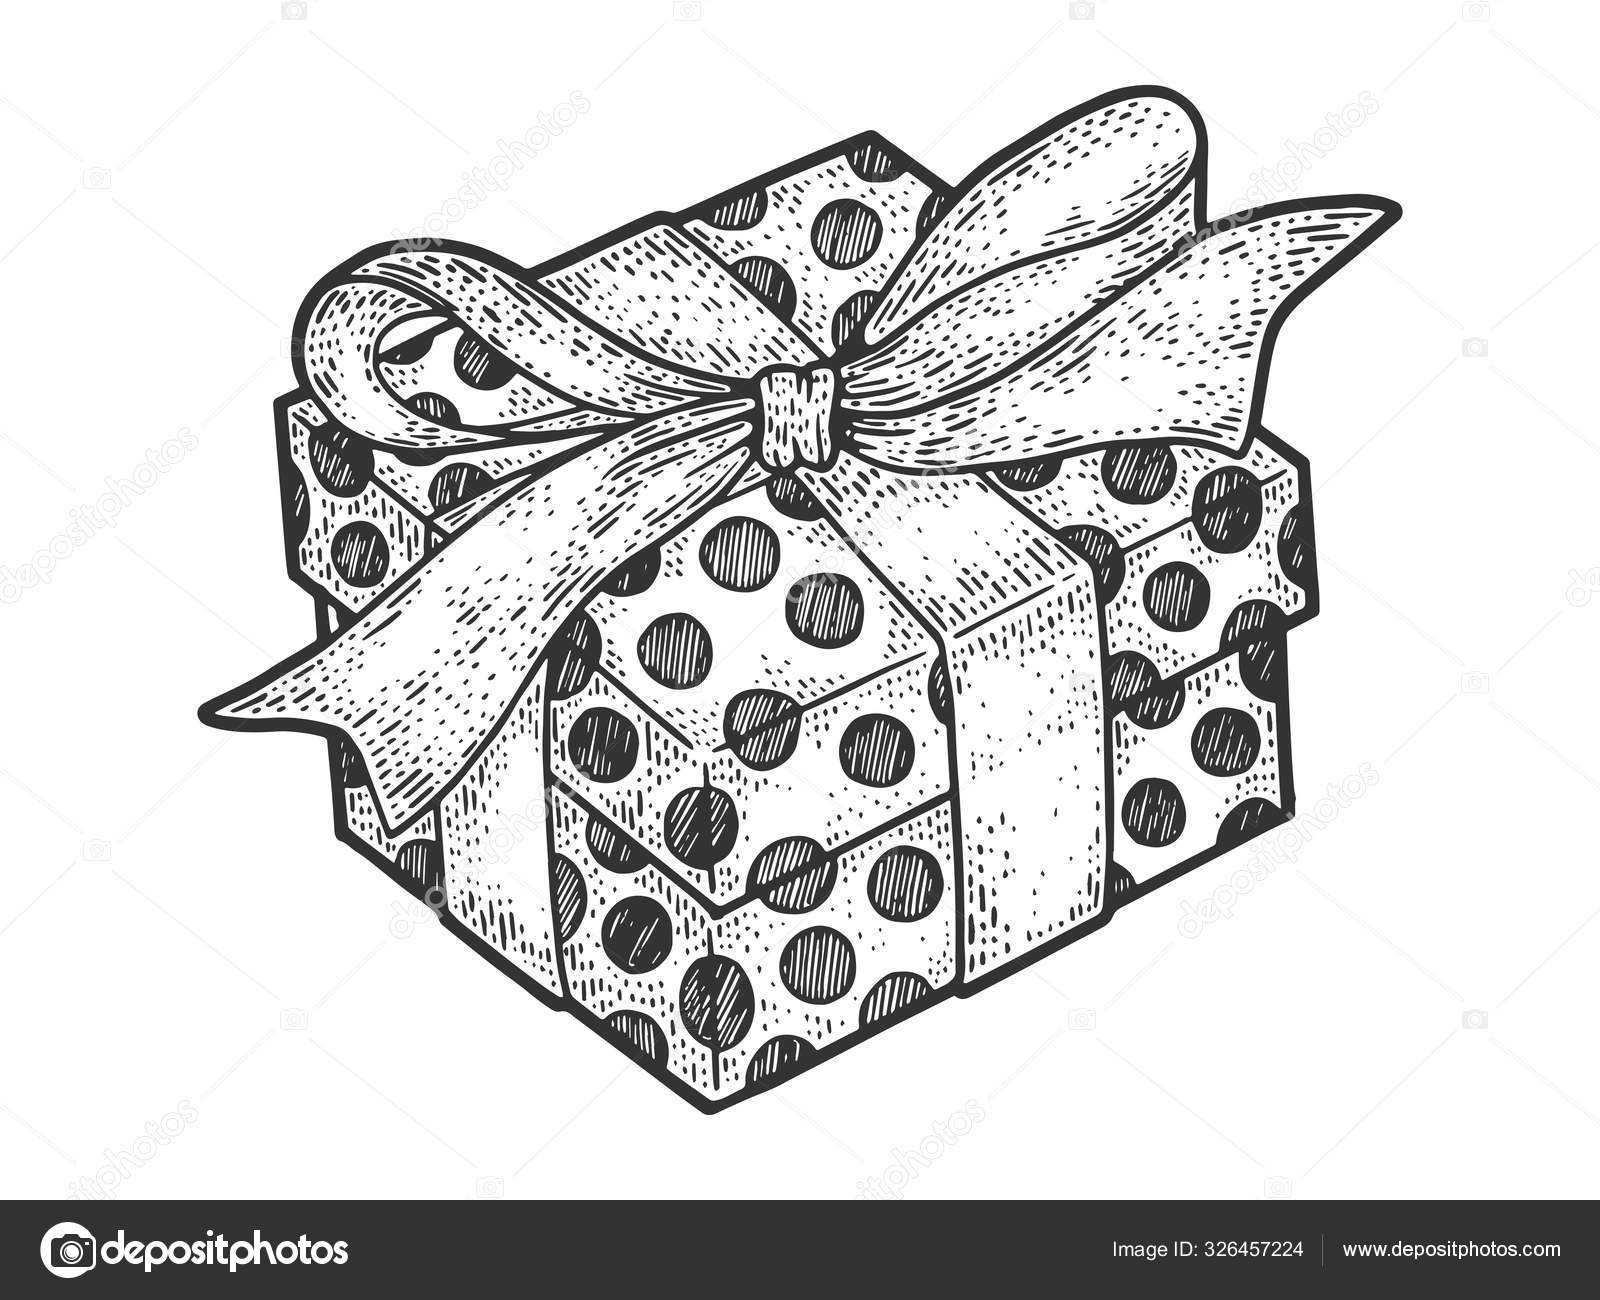 https://st3.depositphotos.com/5891300/32645/v/1600/depositphotos_326457224-stock-illustration-gift-box-with-ribbons-and.jpg